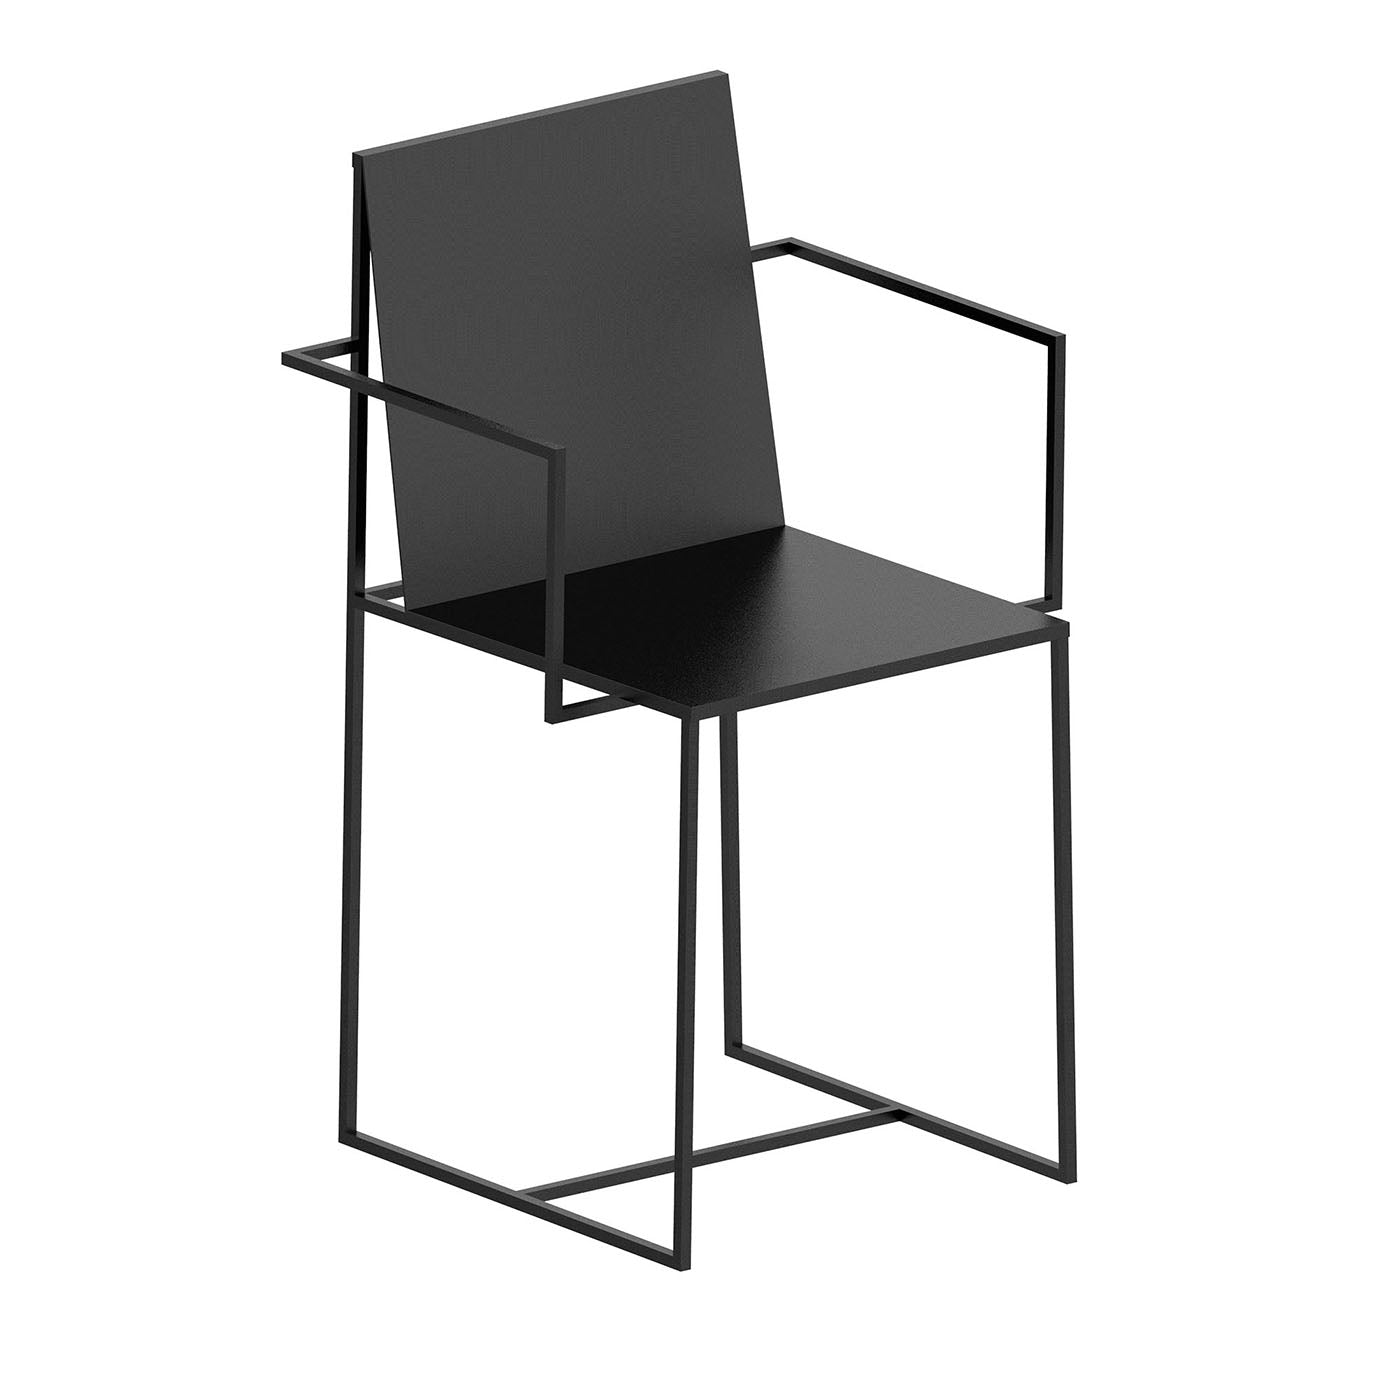 Slim Sissi Black Cooper Chair by Maurizio Peregalli - Main view